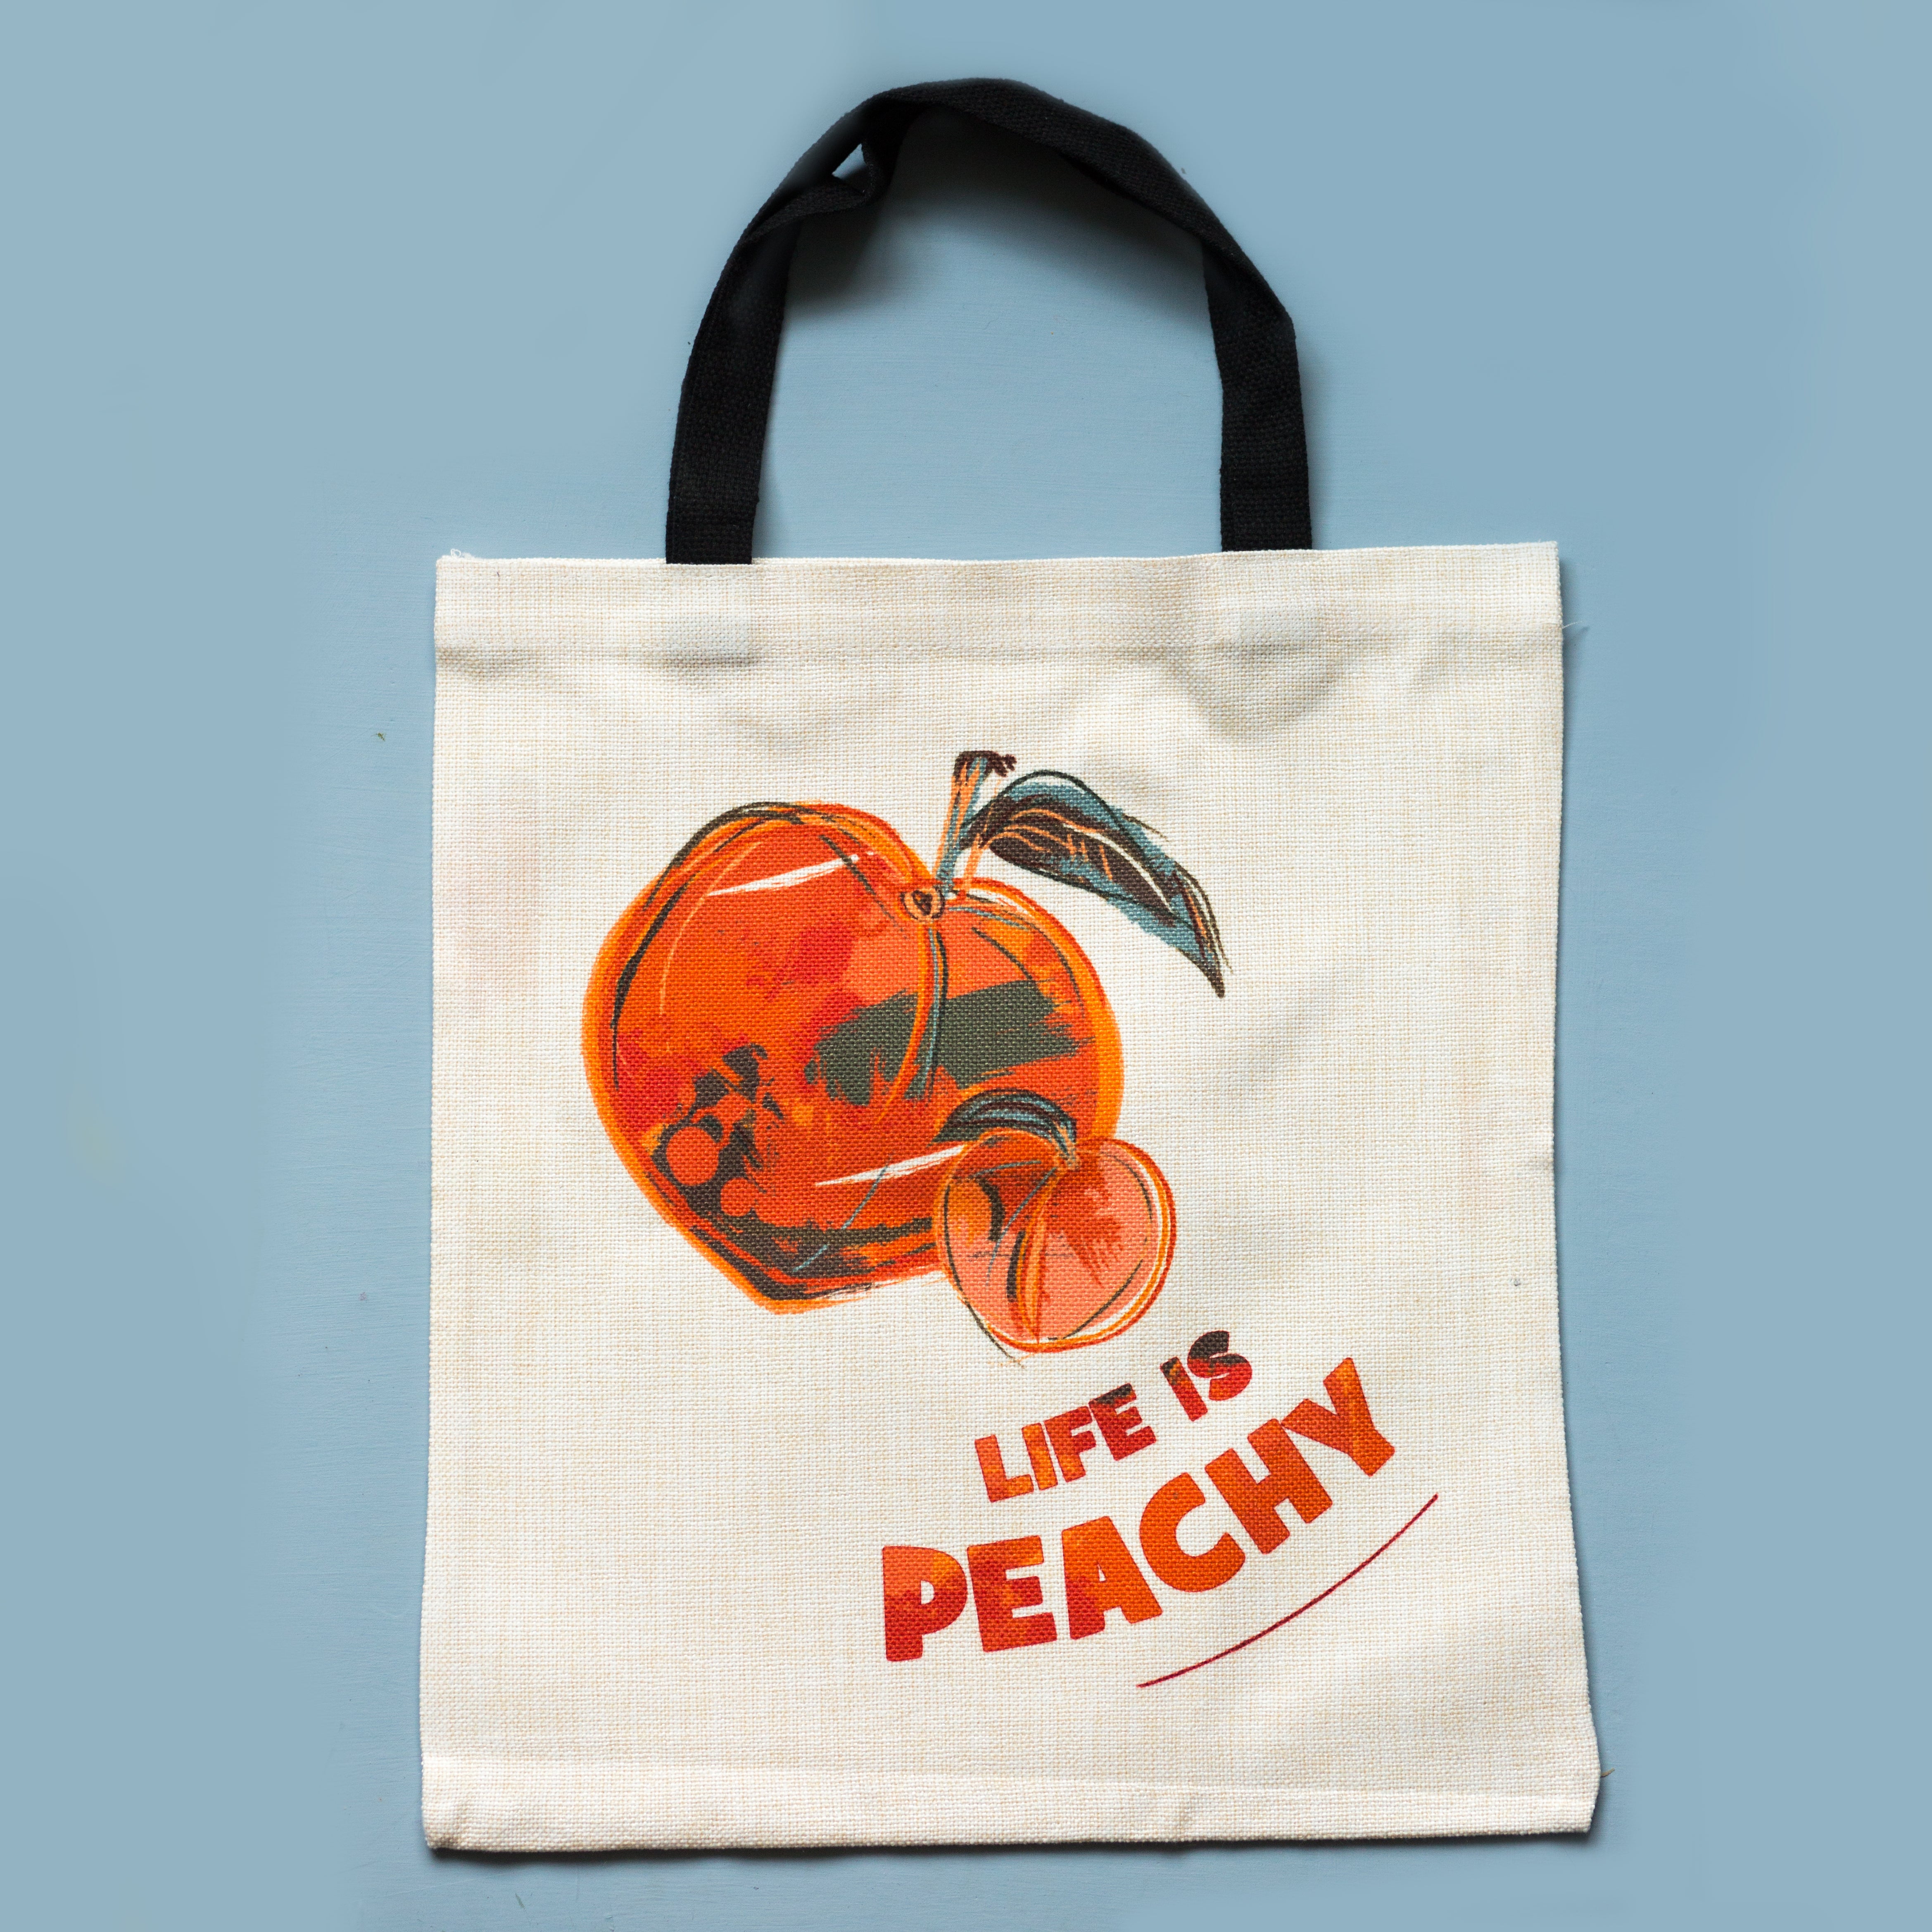 Life is peachy tote bag flat lay